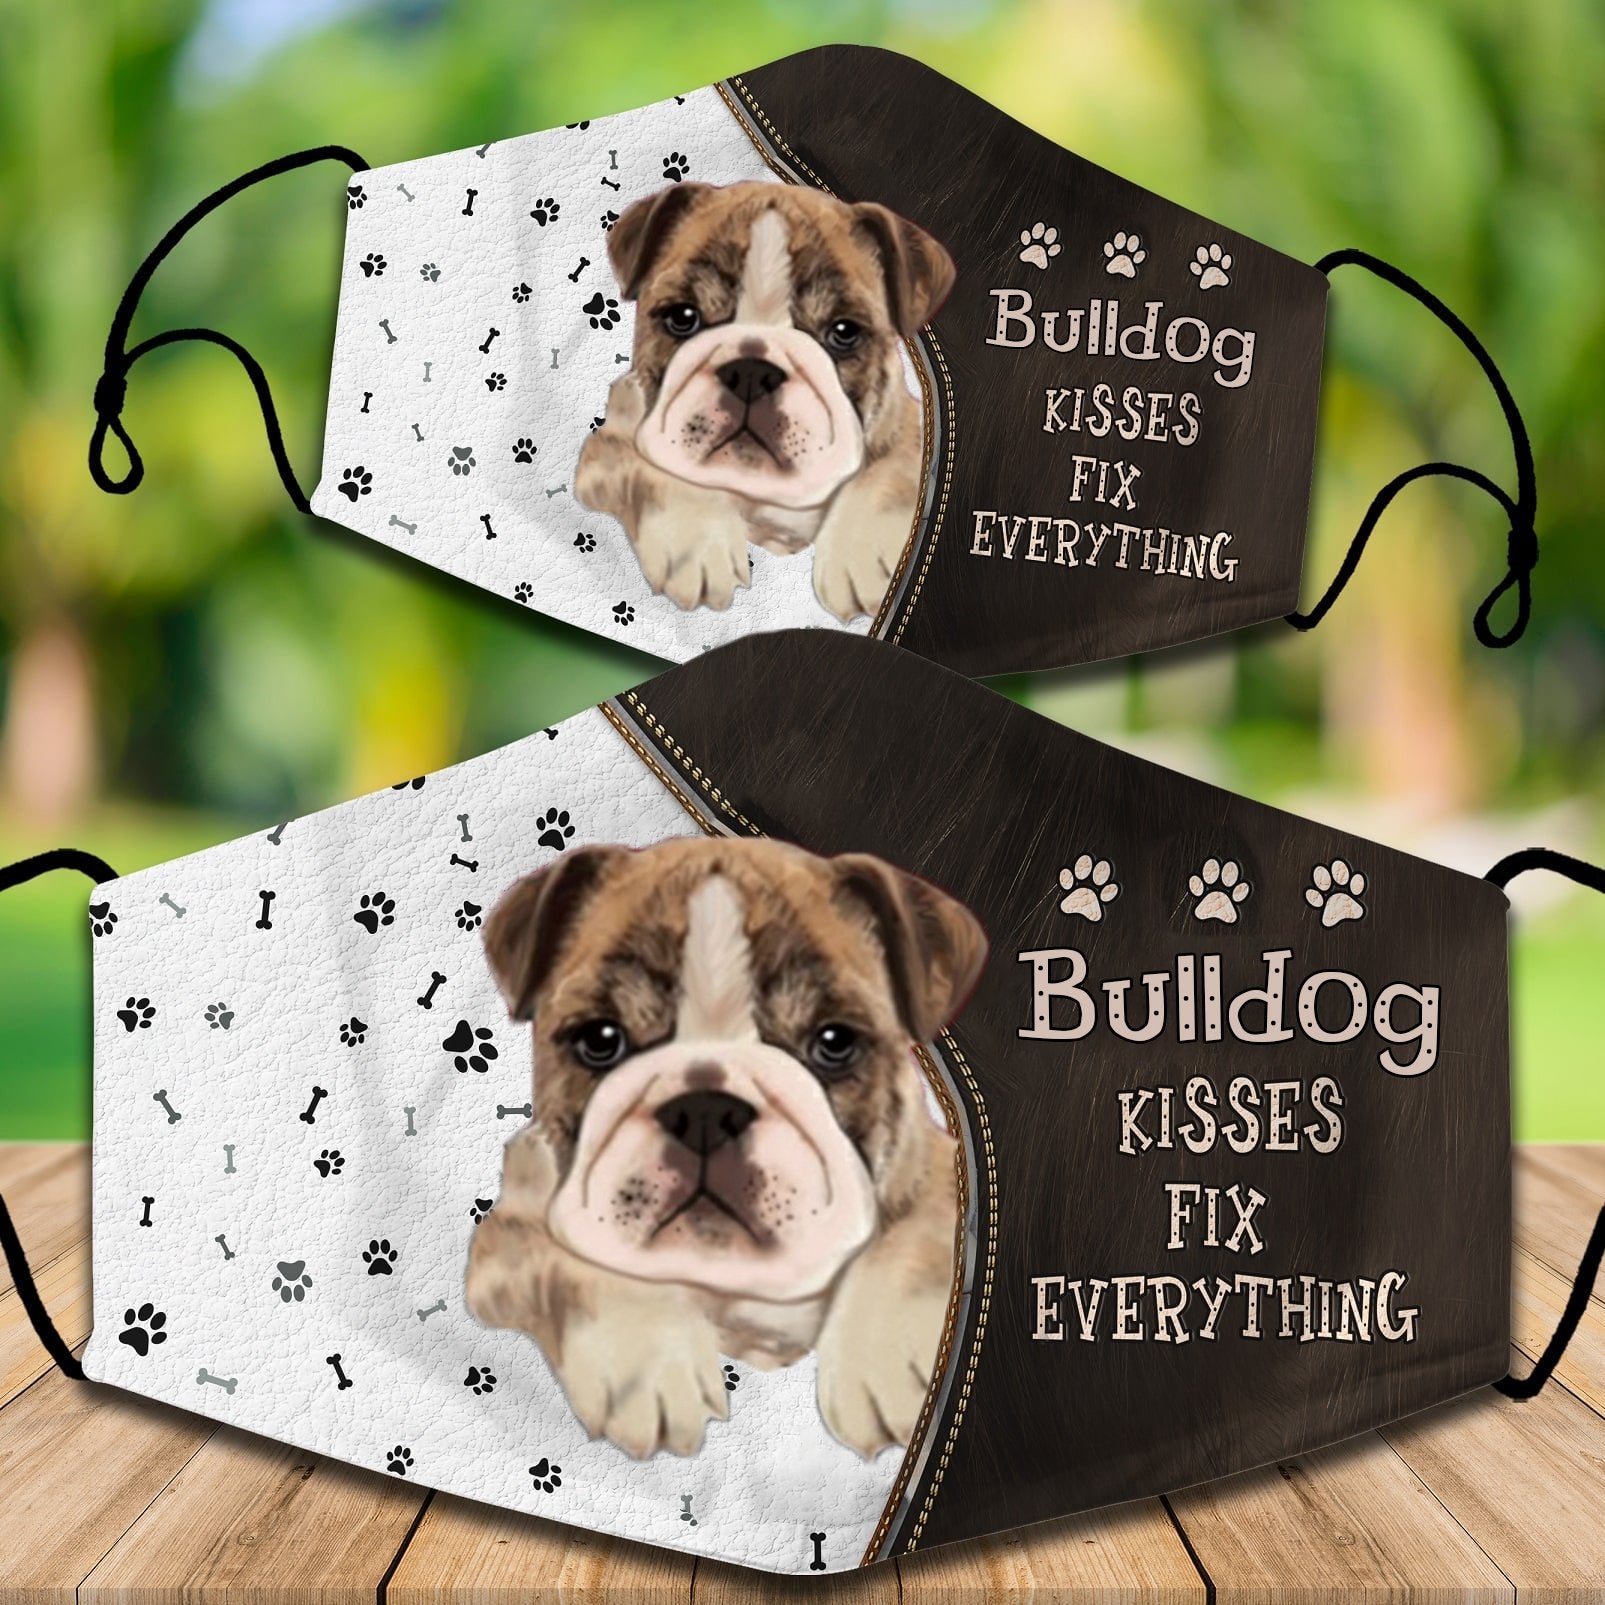 Bulldog2 Kisses Fix Everything Veil